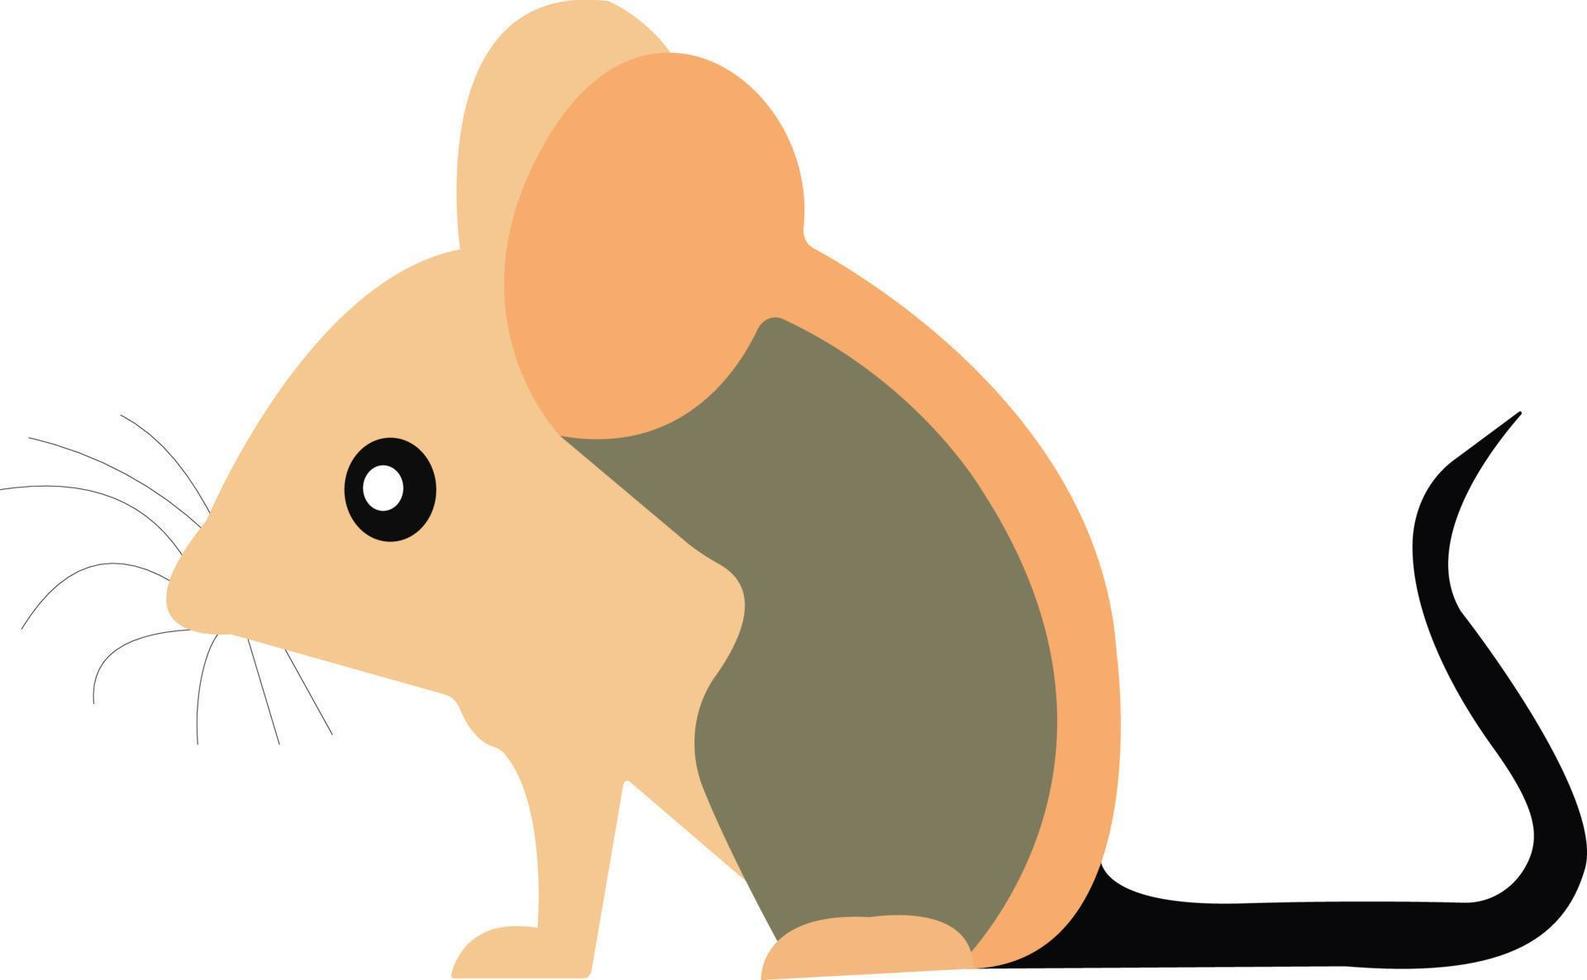 rat icon cartoon style royalty free vector